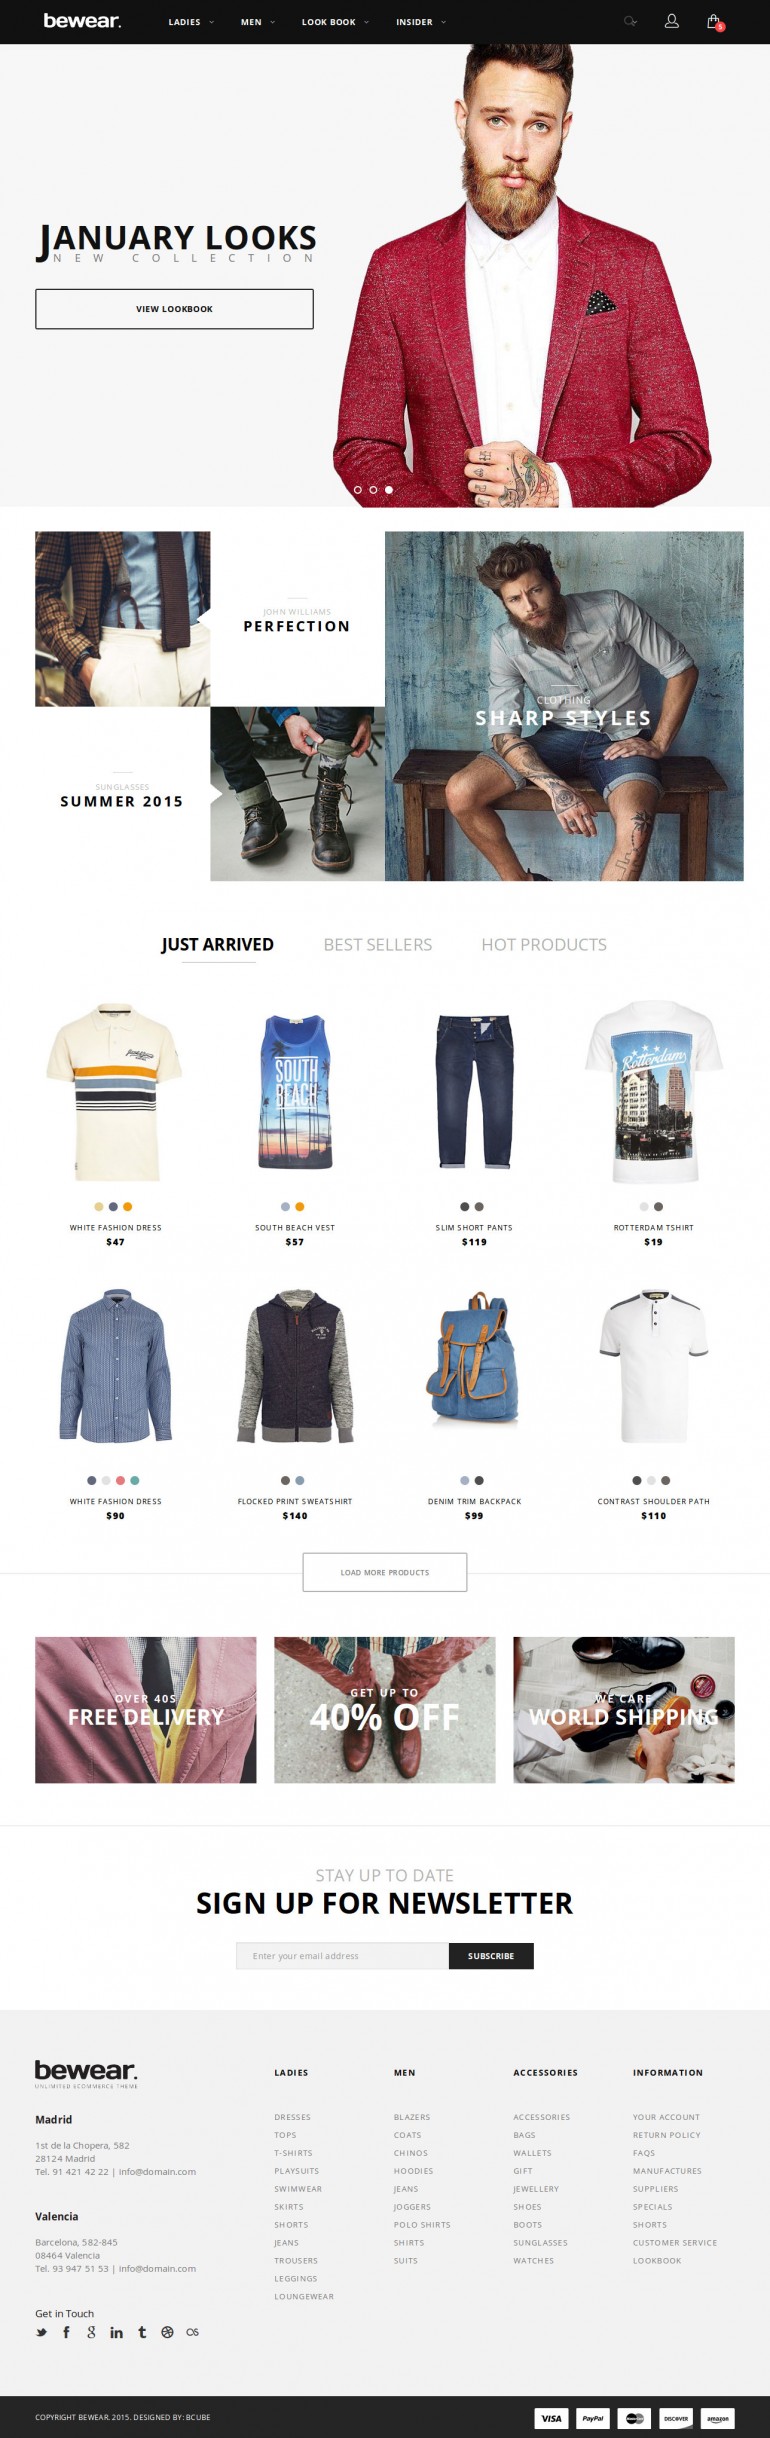 Bewear – Fashion LookBook on Inspirationde